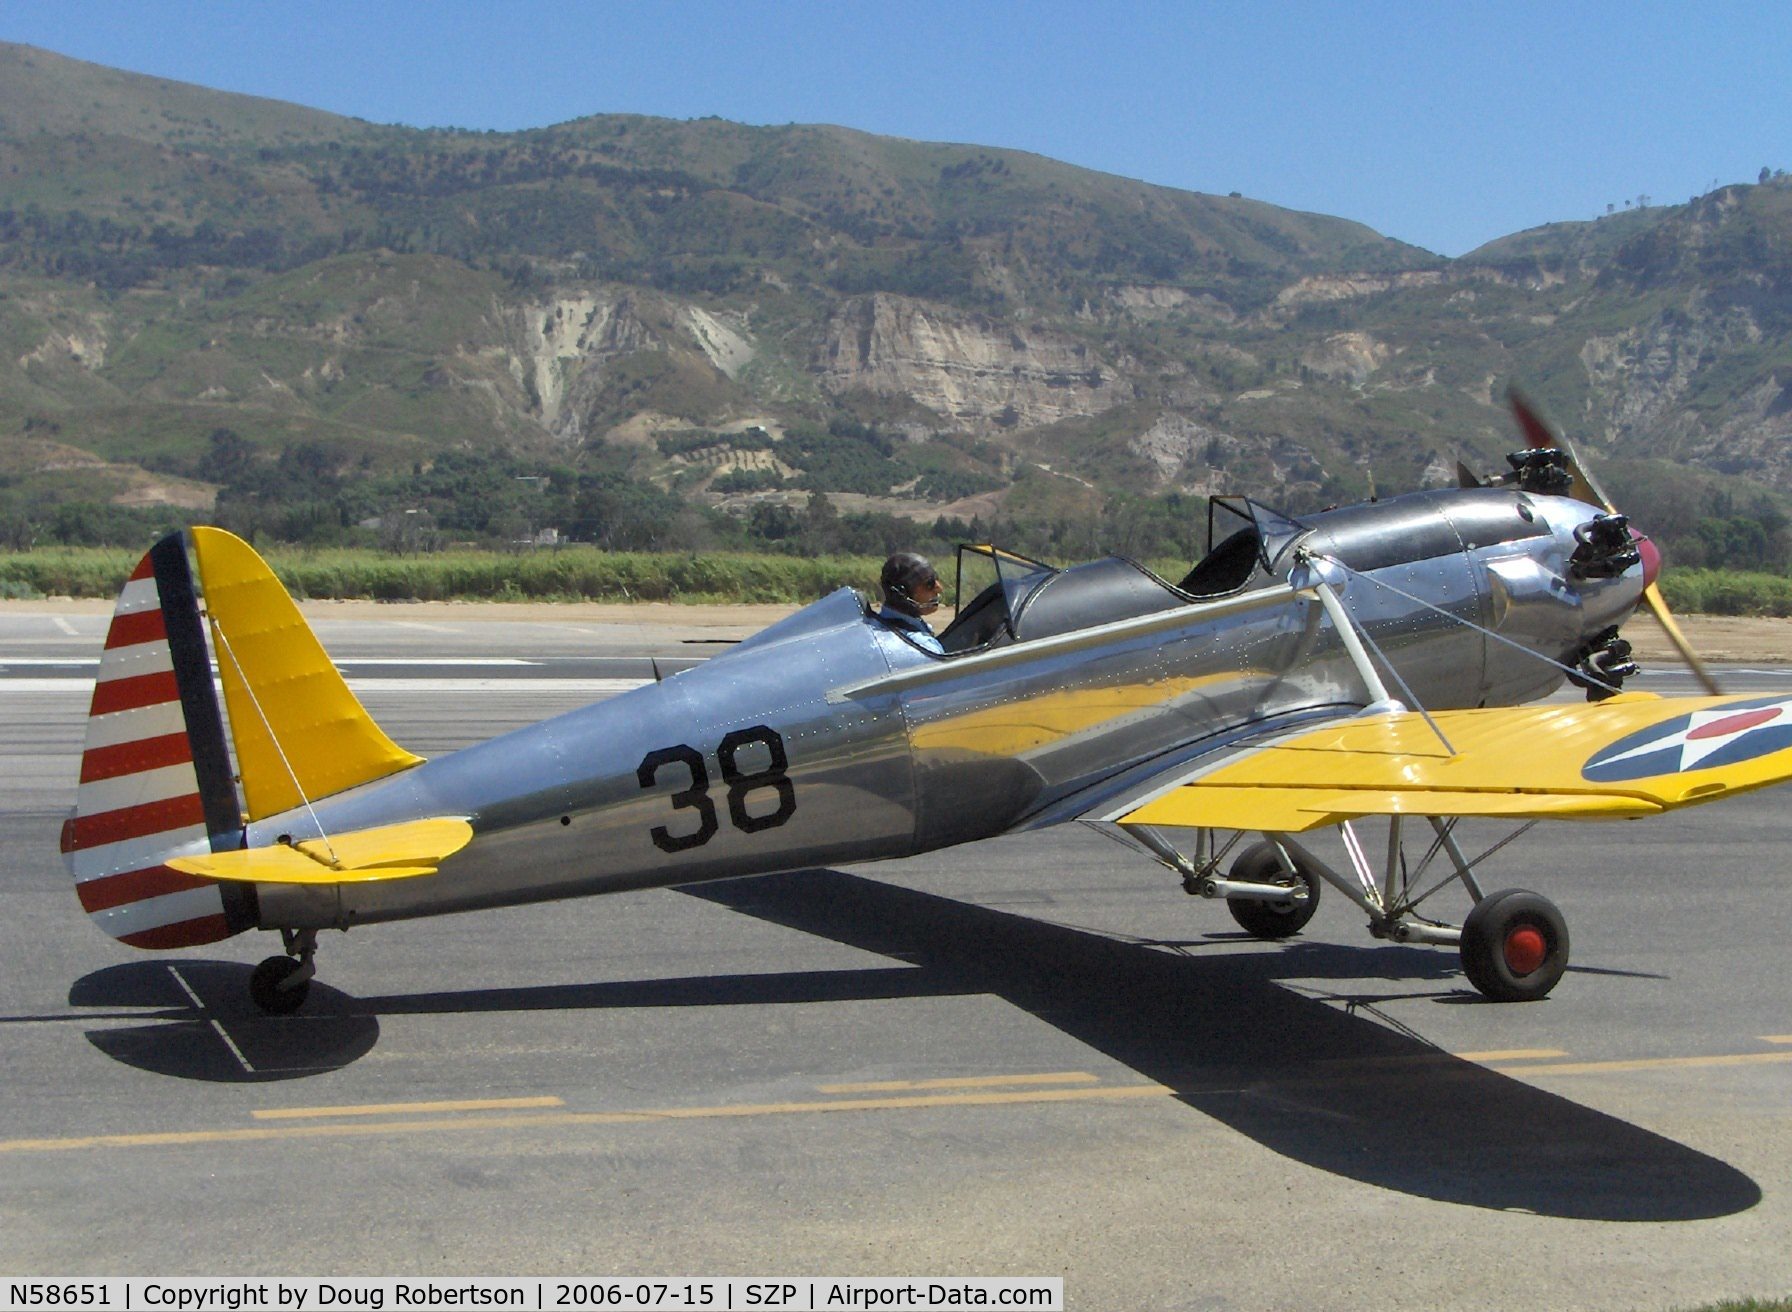 N58651, 1941 Ryan PT-22 Recruit (ST3KR) C/N 1426, 1941 Ryan Aeronautical ST-3KR as PT-22, Kinner R5 160 Hp engine idling